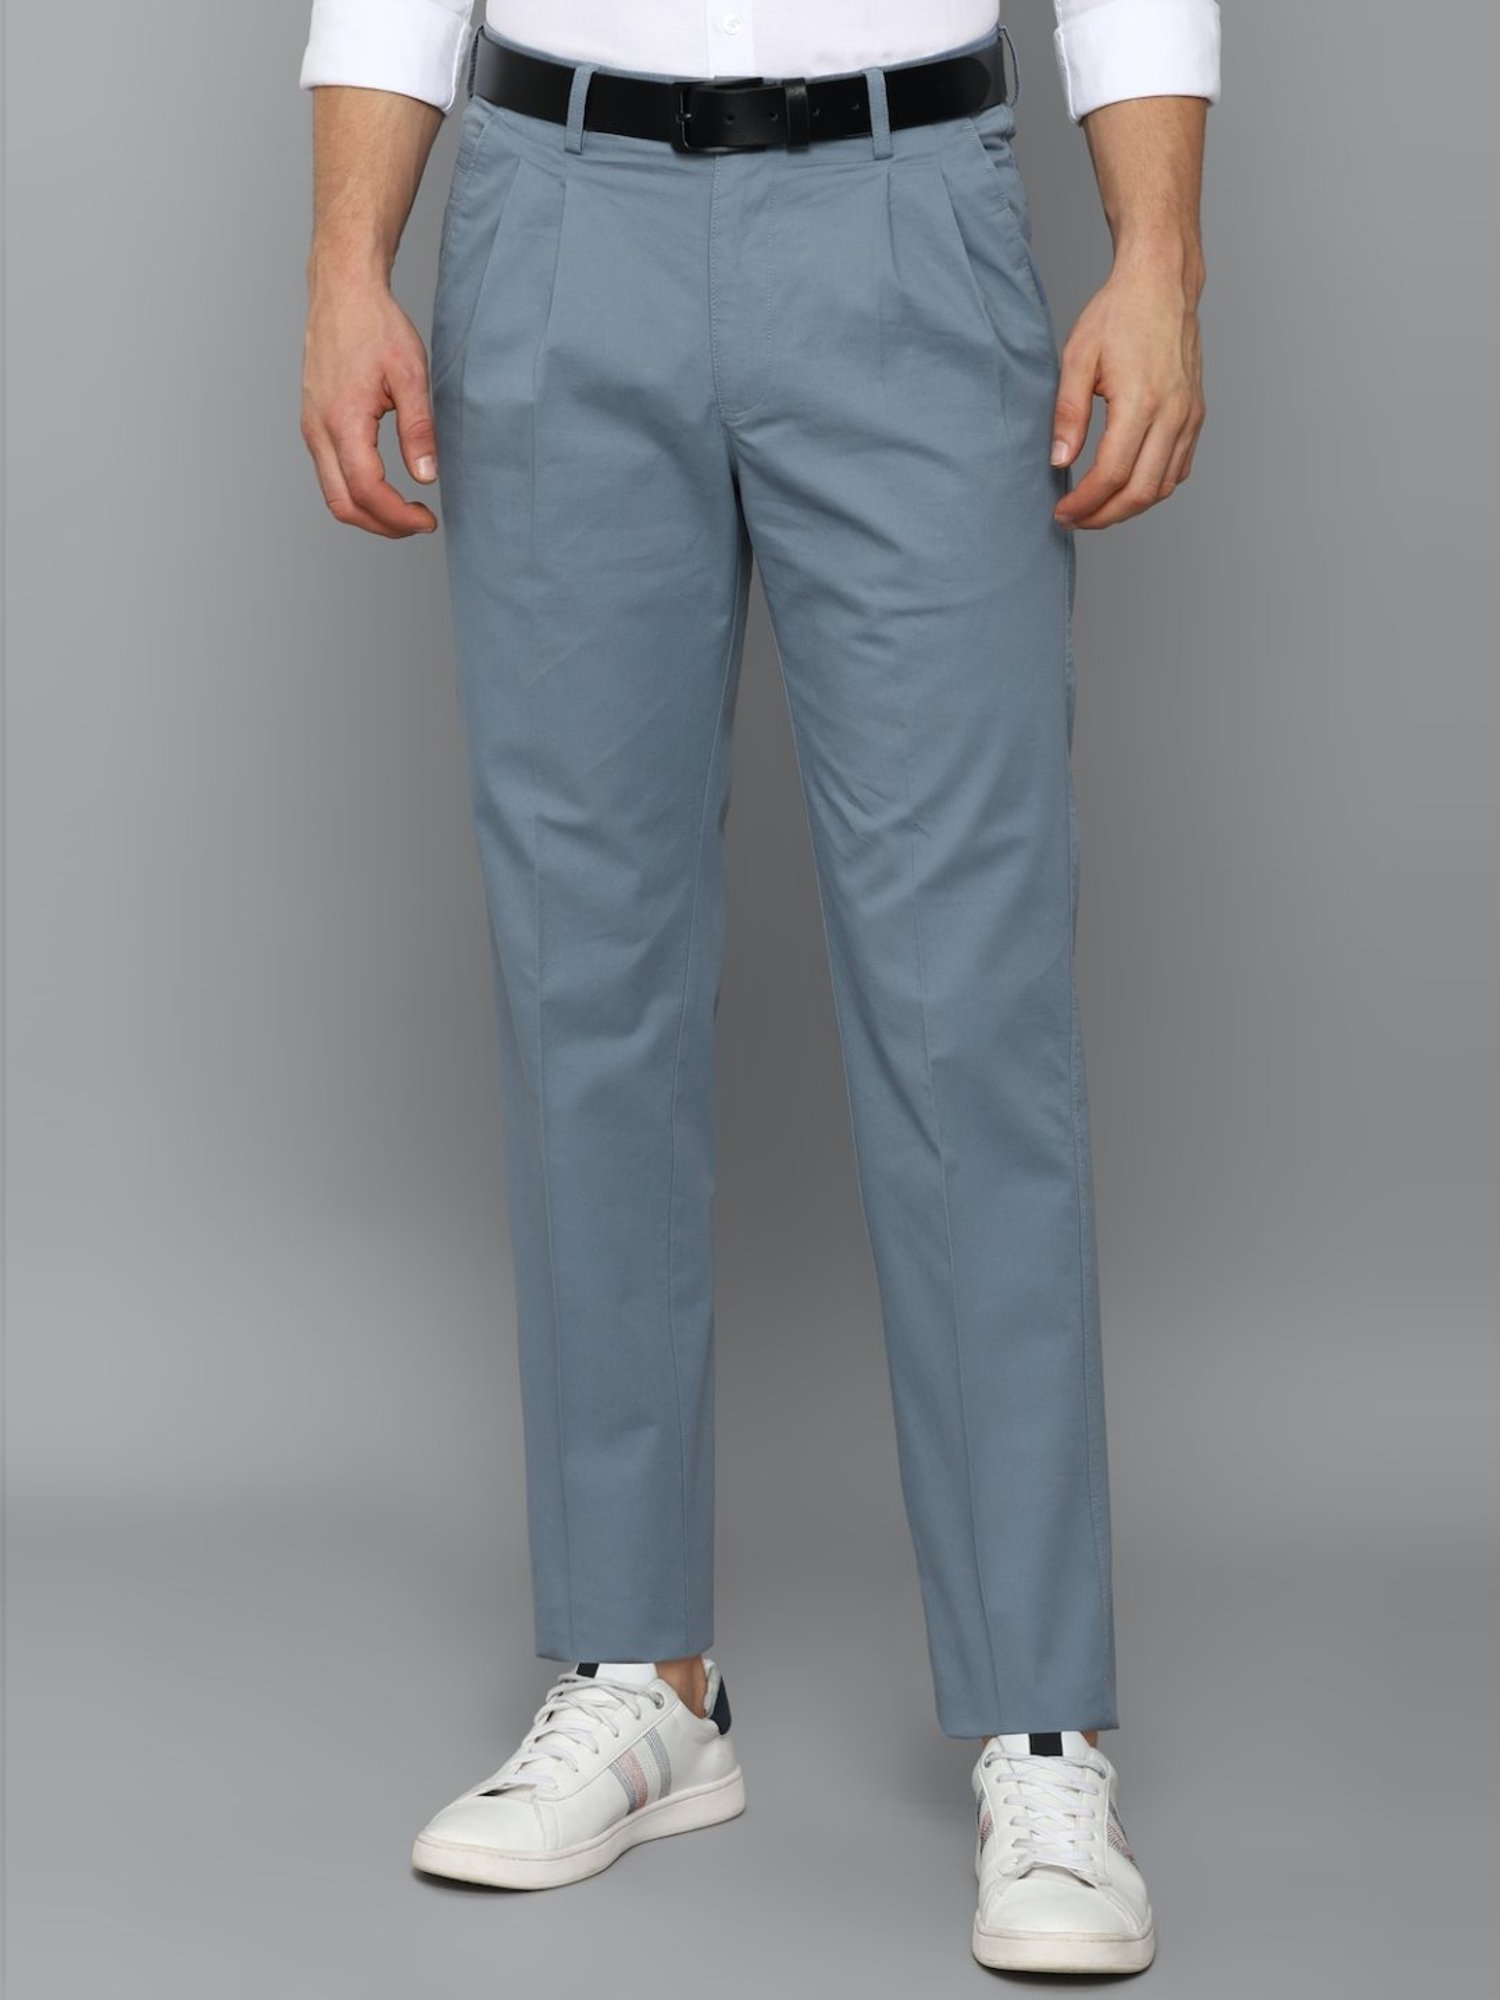 Buy Men Khaki Regular Fit Solid Casual Trousers Online  755787  Allen  Solly